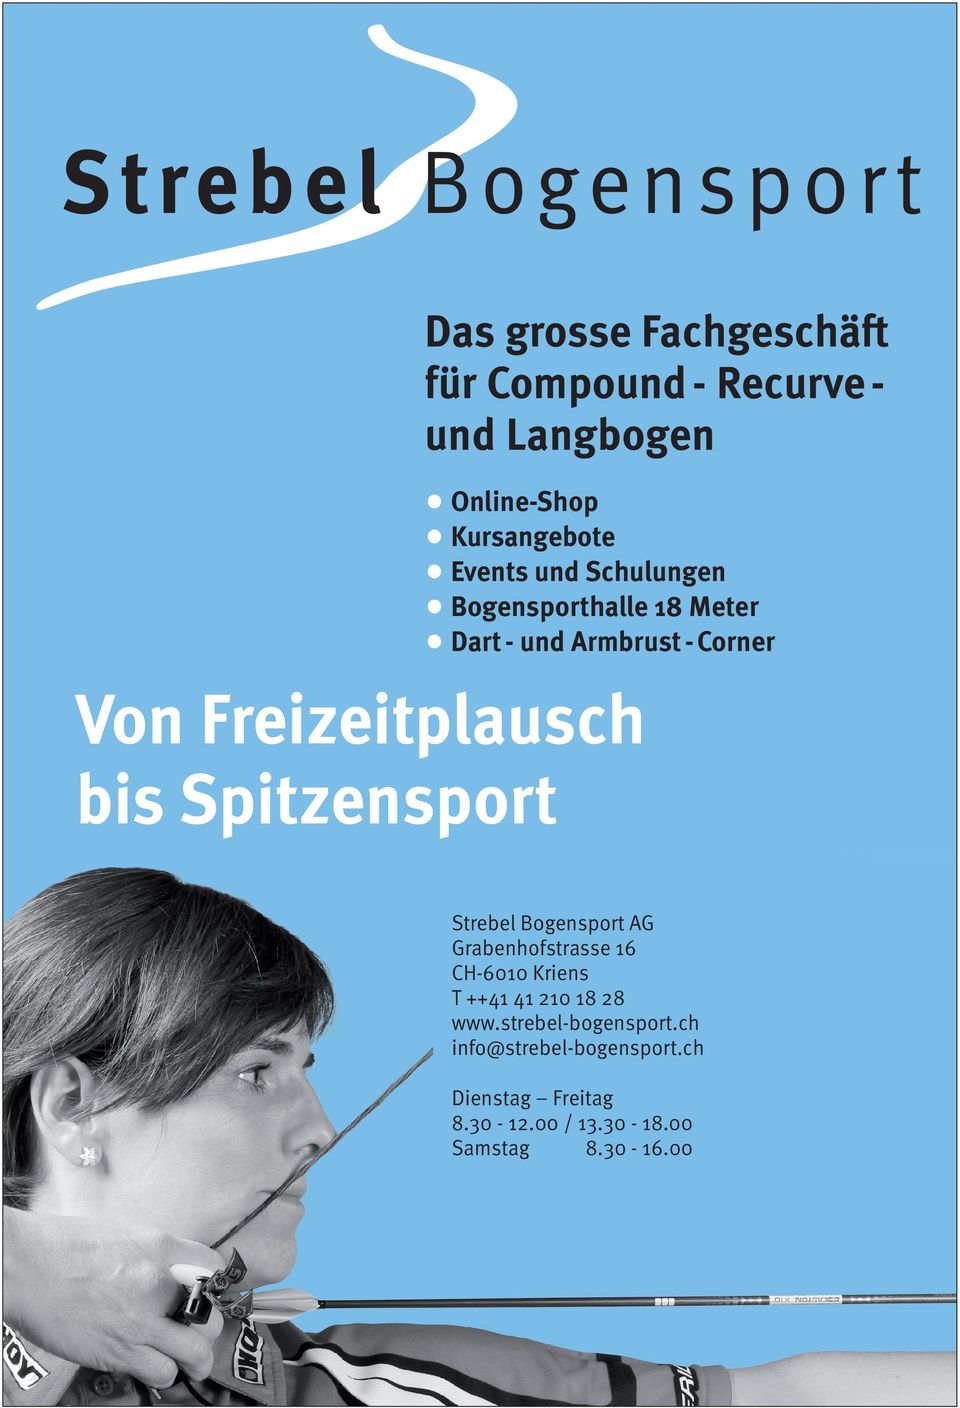 Spitzensport Strebel Bogensport AG Grabenhofstrasse 16 CH-6010 Kriens T ++41 41 210 18 28 www.